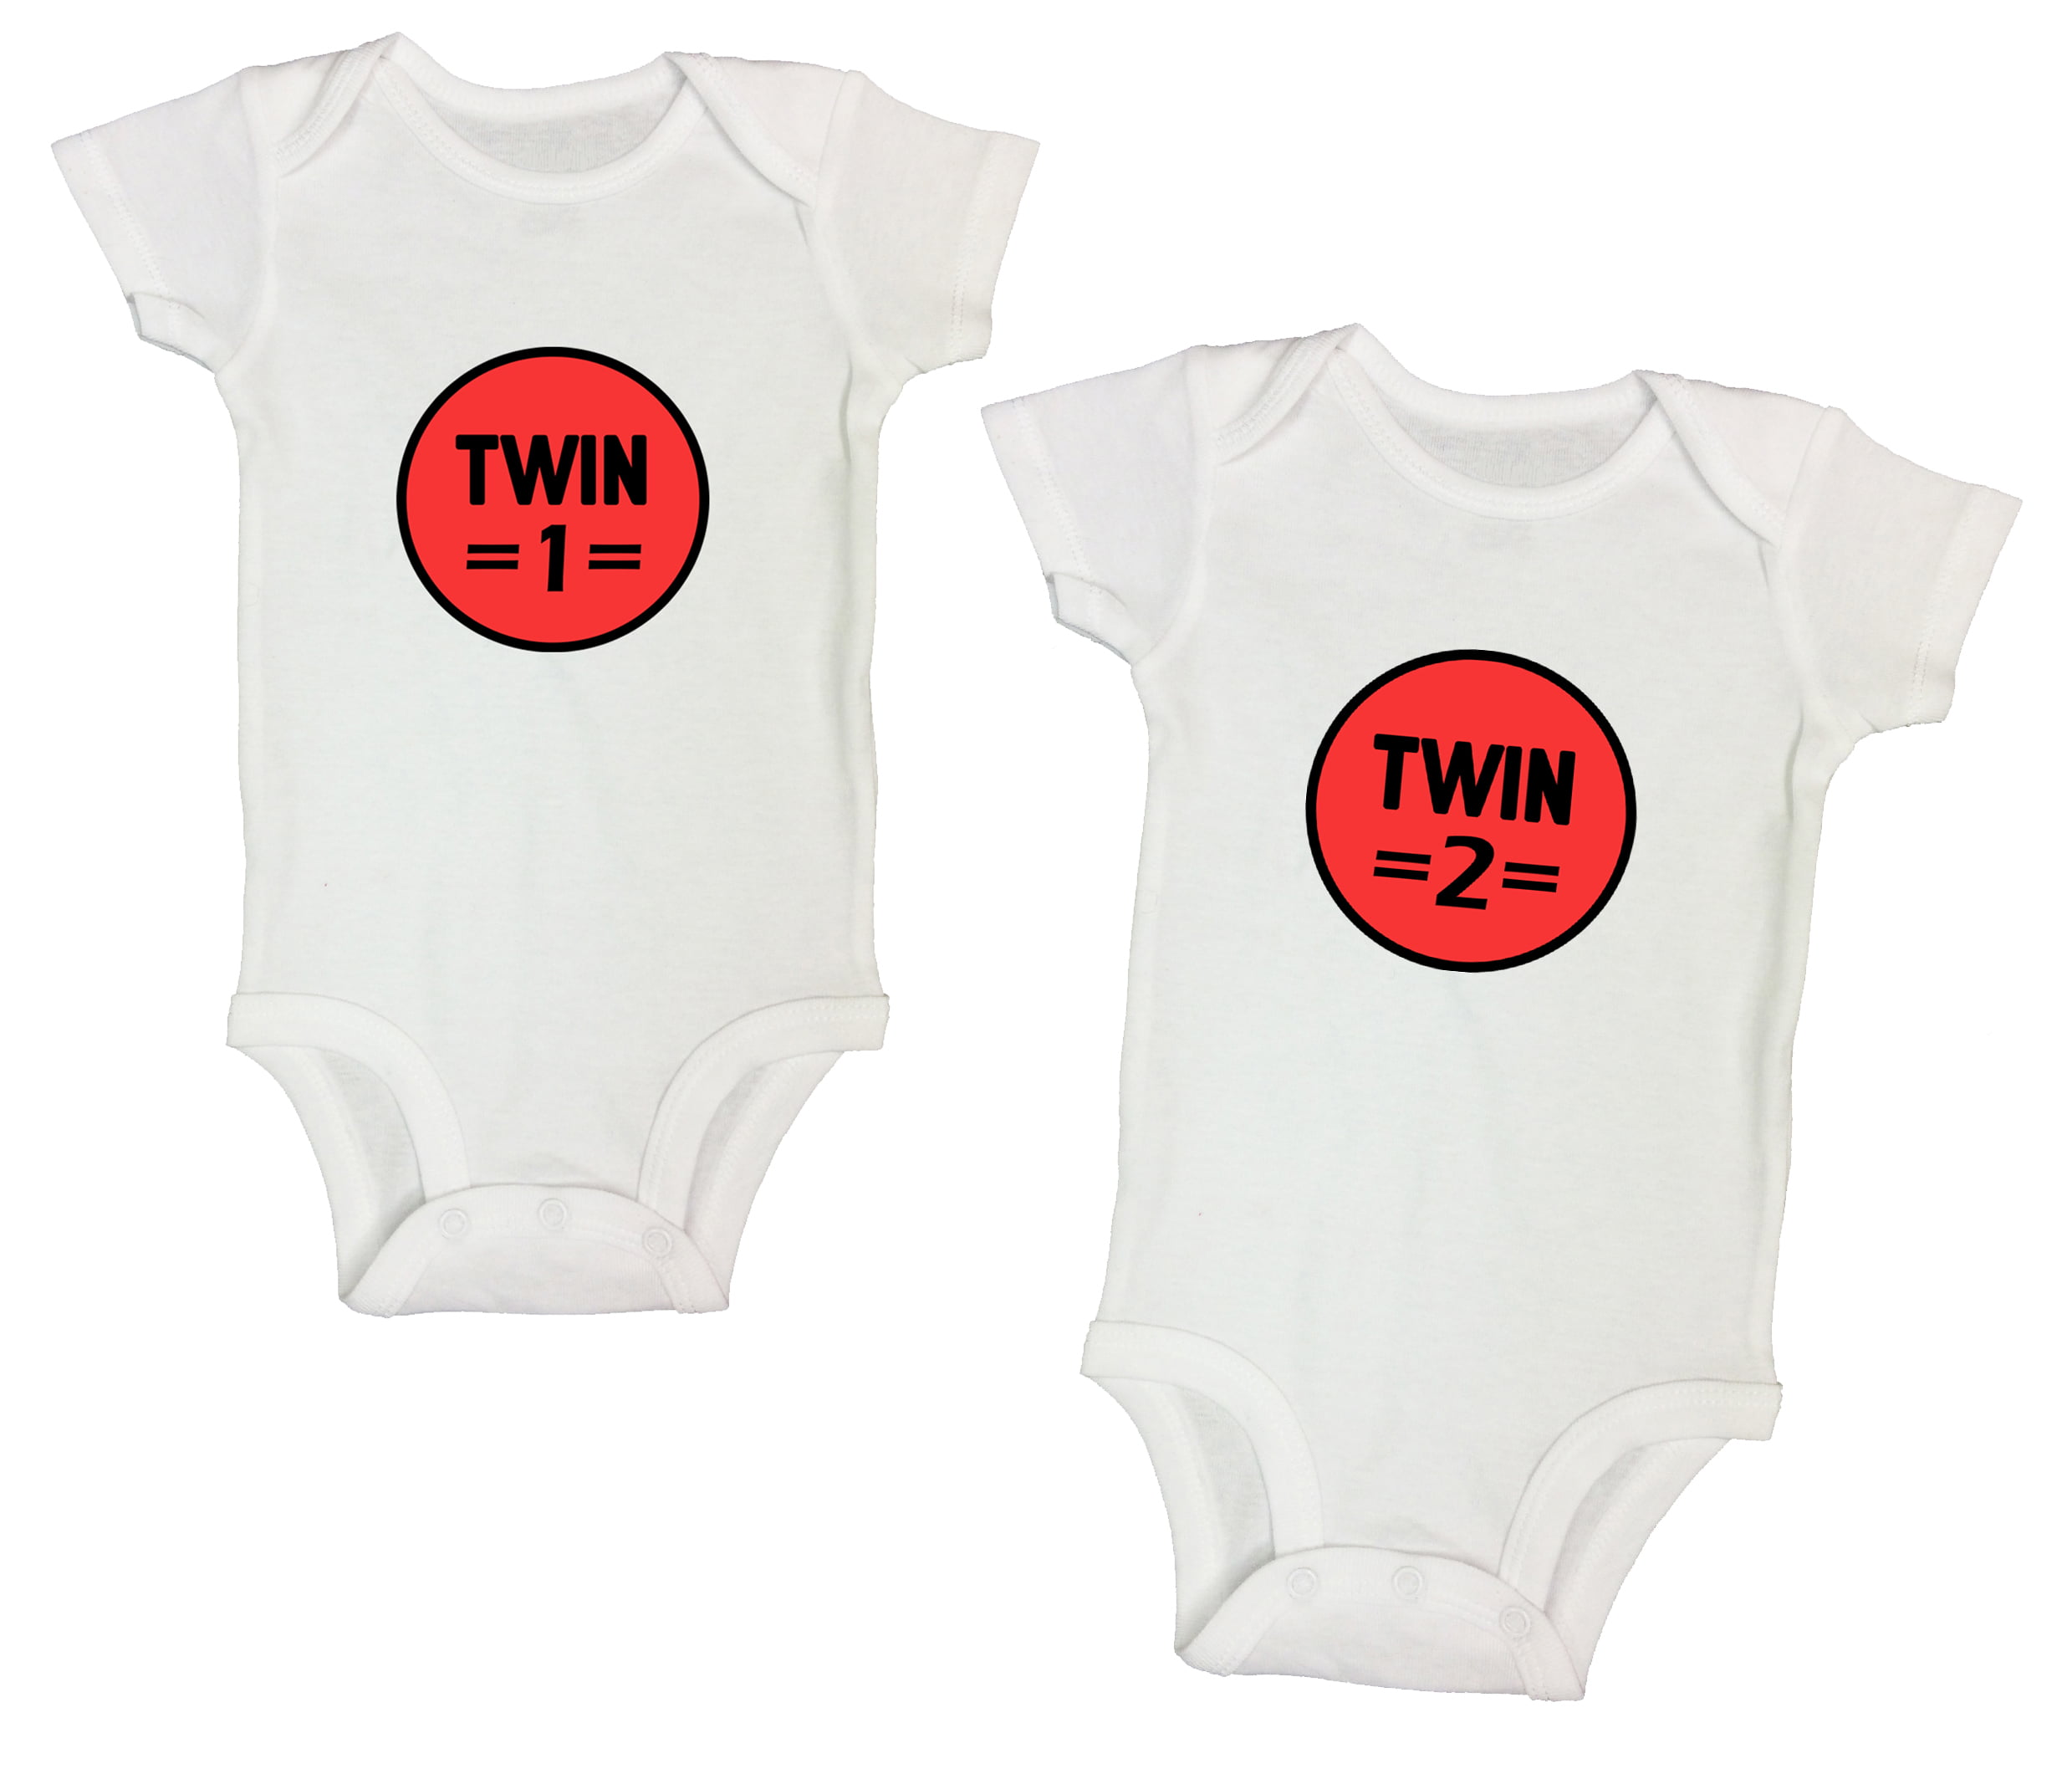 twin 1 twin 2 shirts